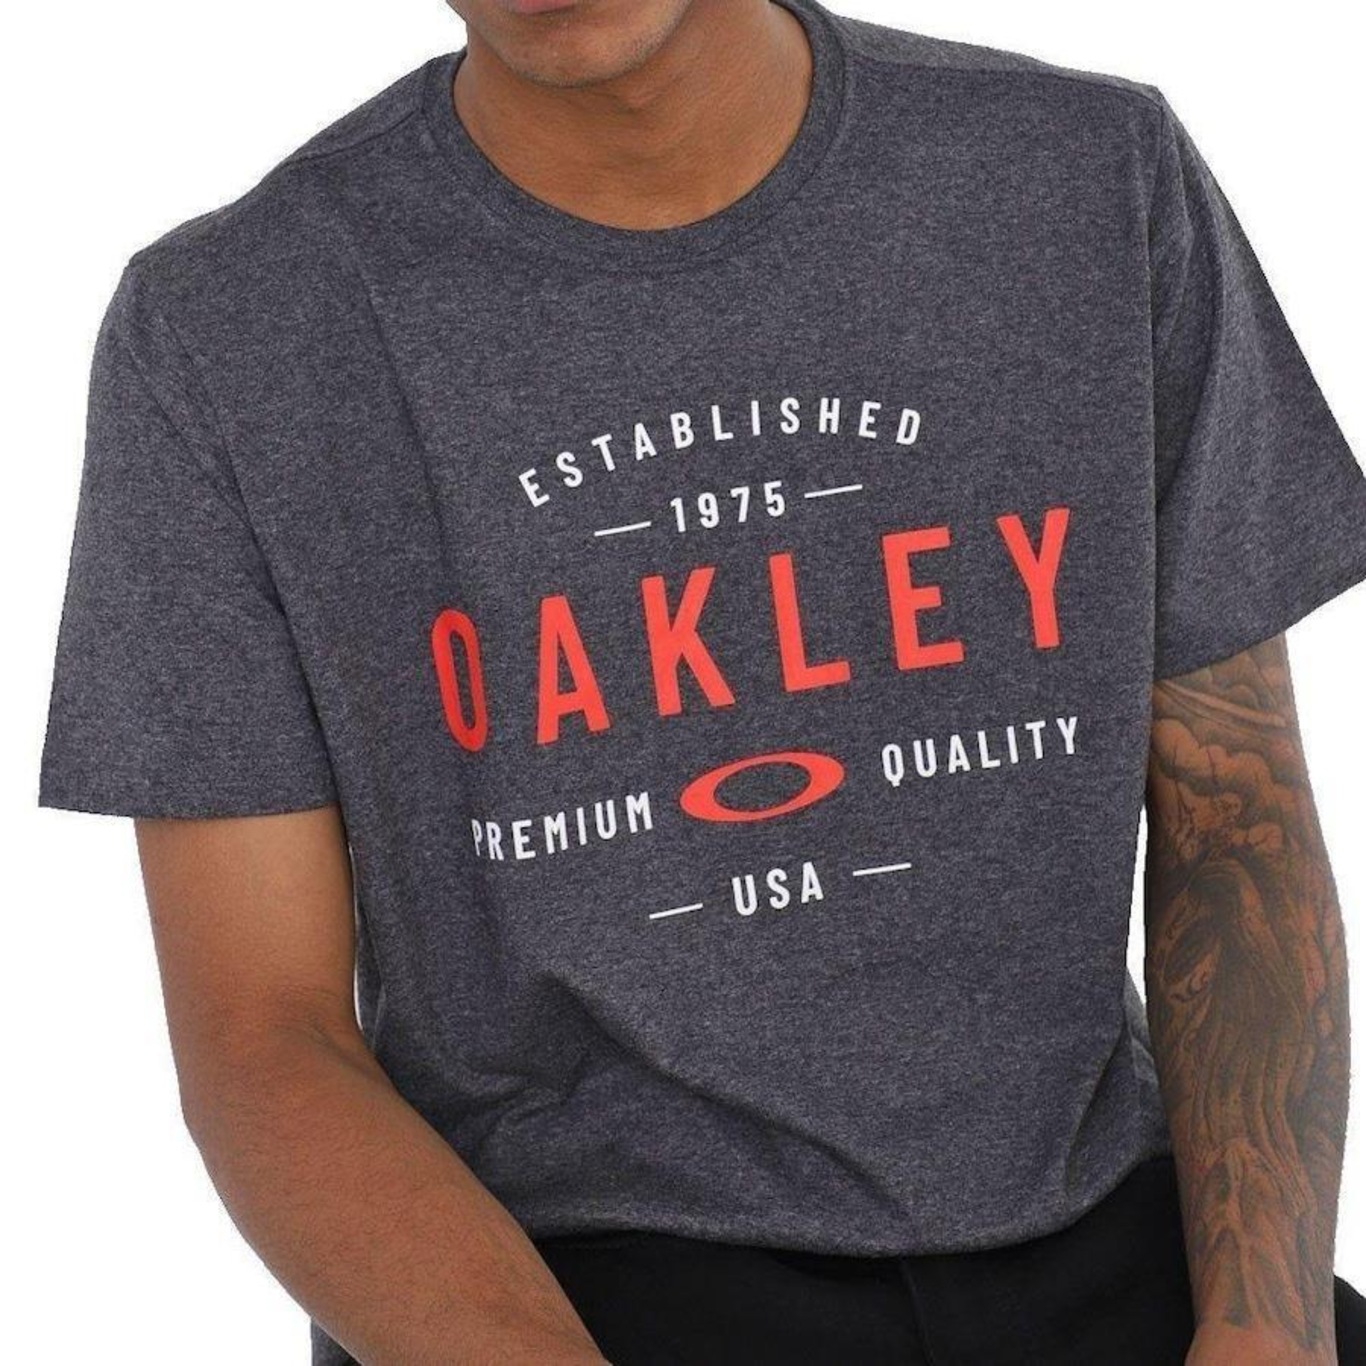 Camiseta Oakley Premium Quality Tee - centralsurf